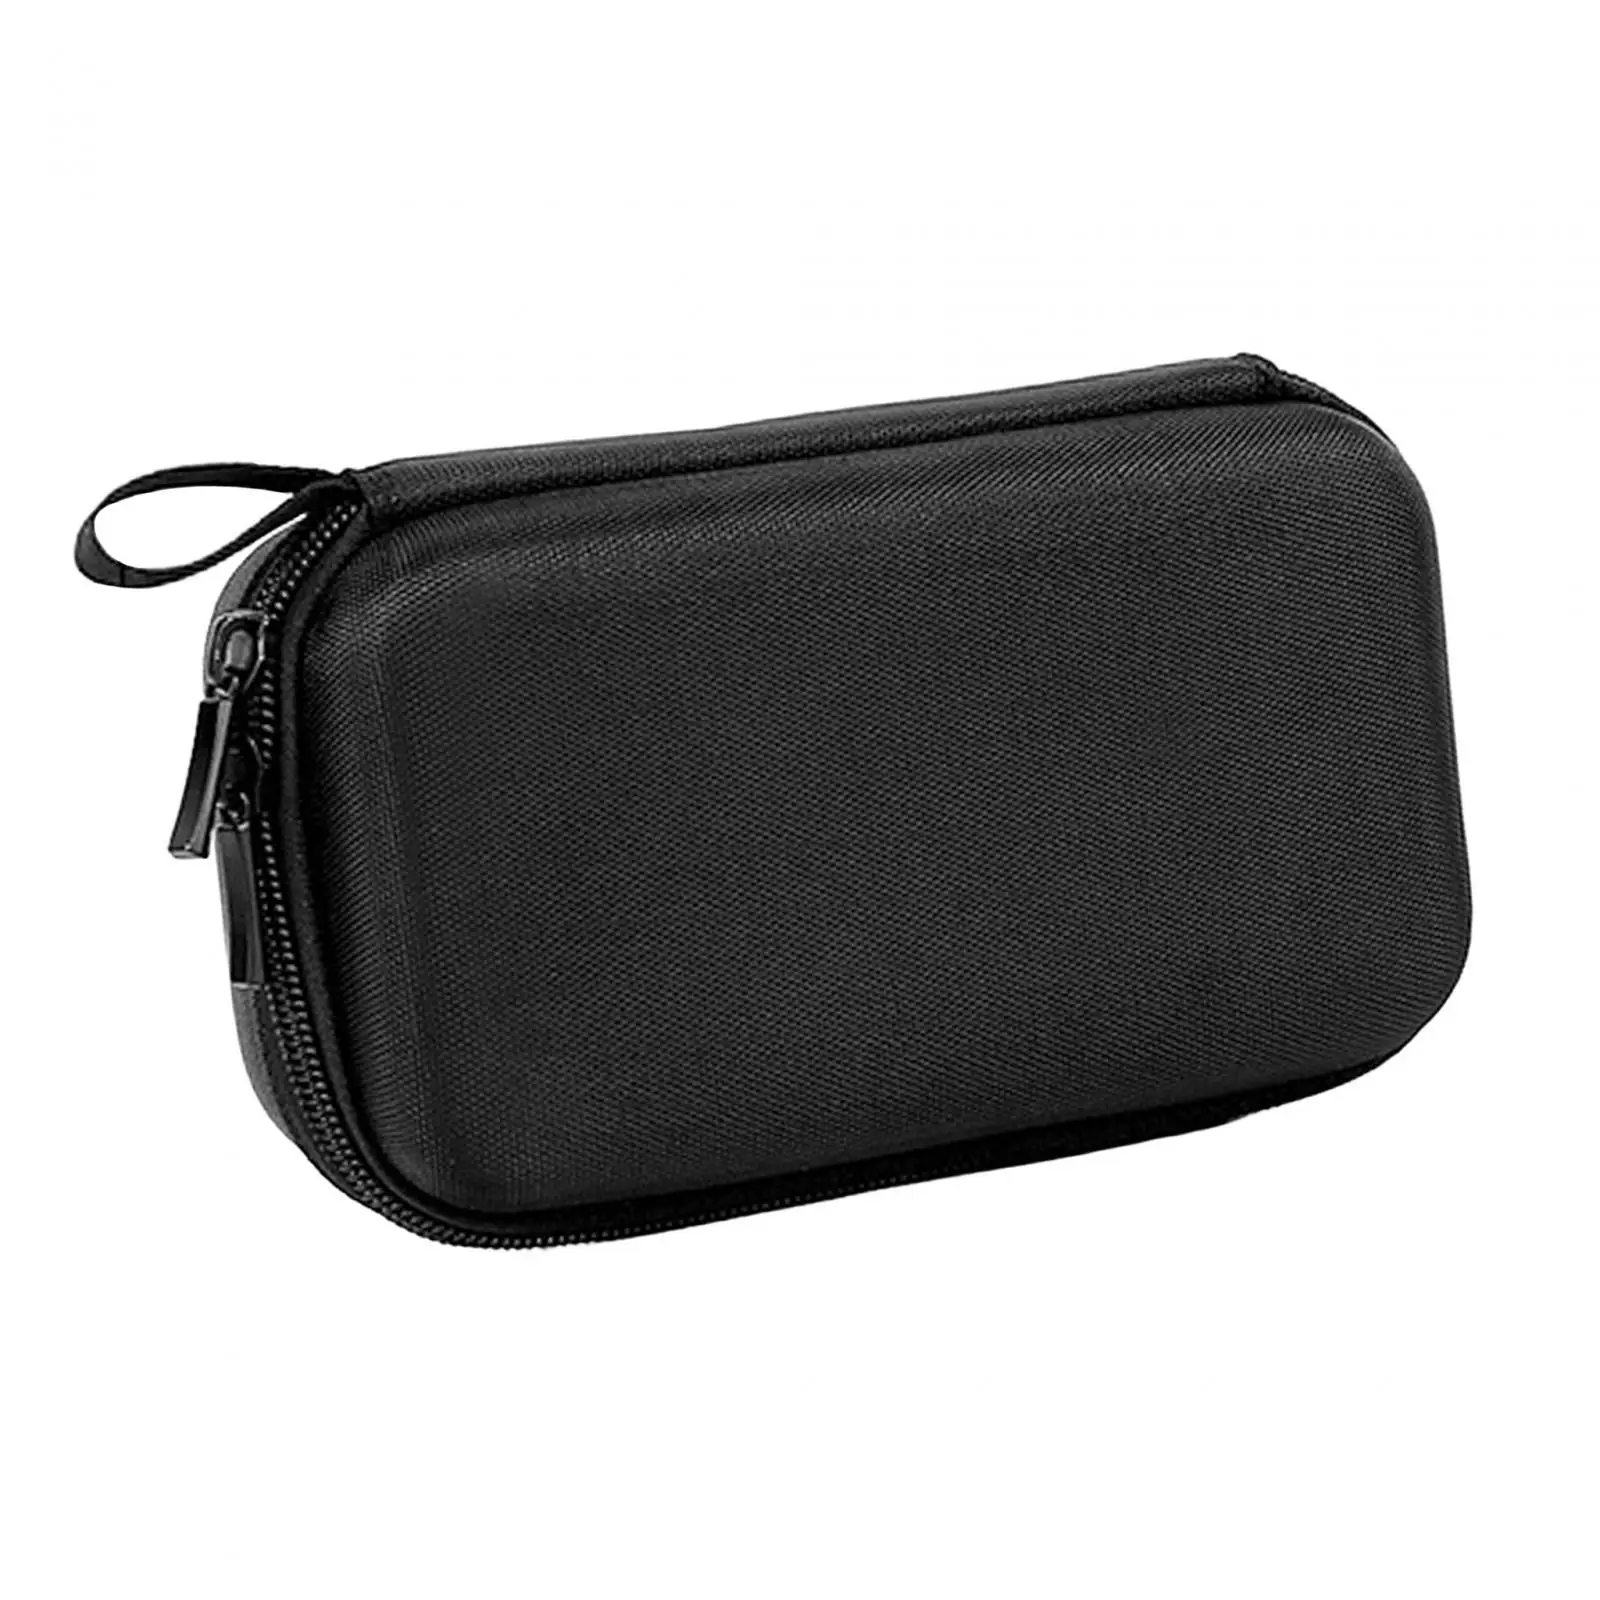 Action Camera Bag Camera Case Storage Case Portable Waterproof Handbag Carrying Case Travel Bag for Go 3 Accessories Organizer